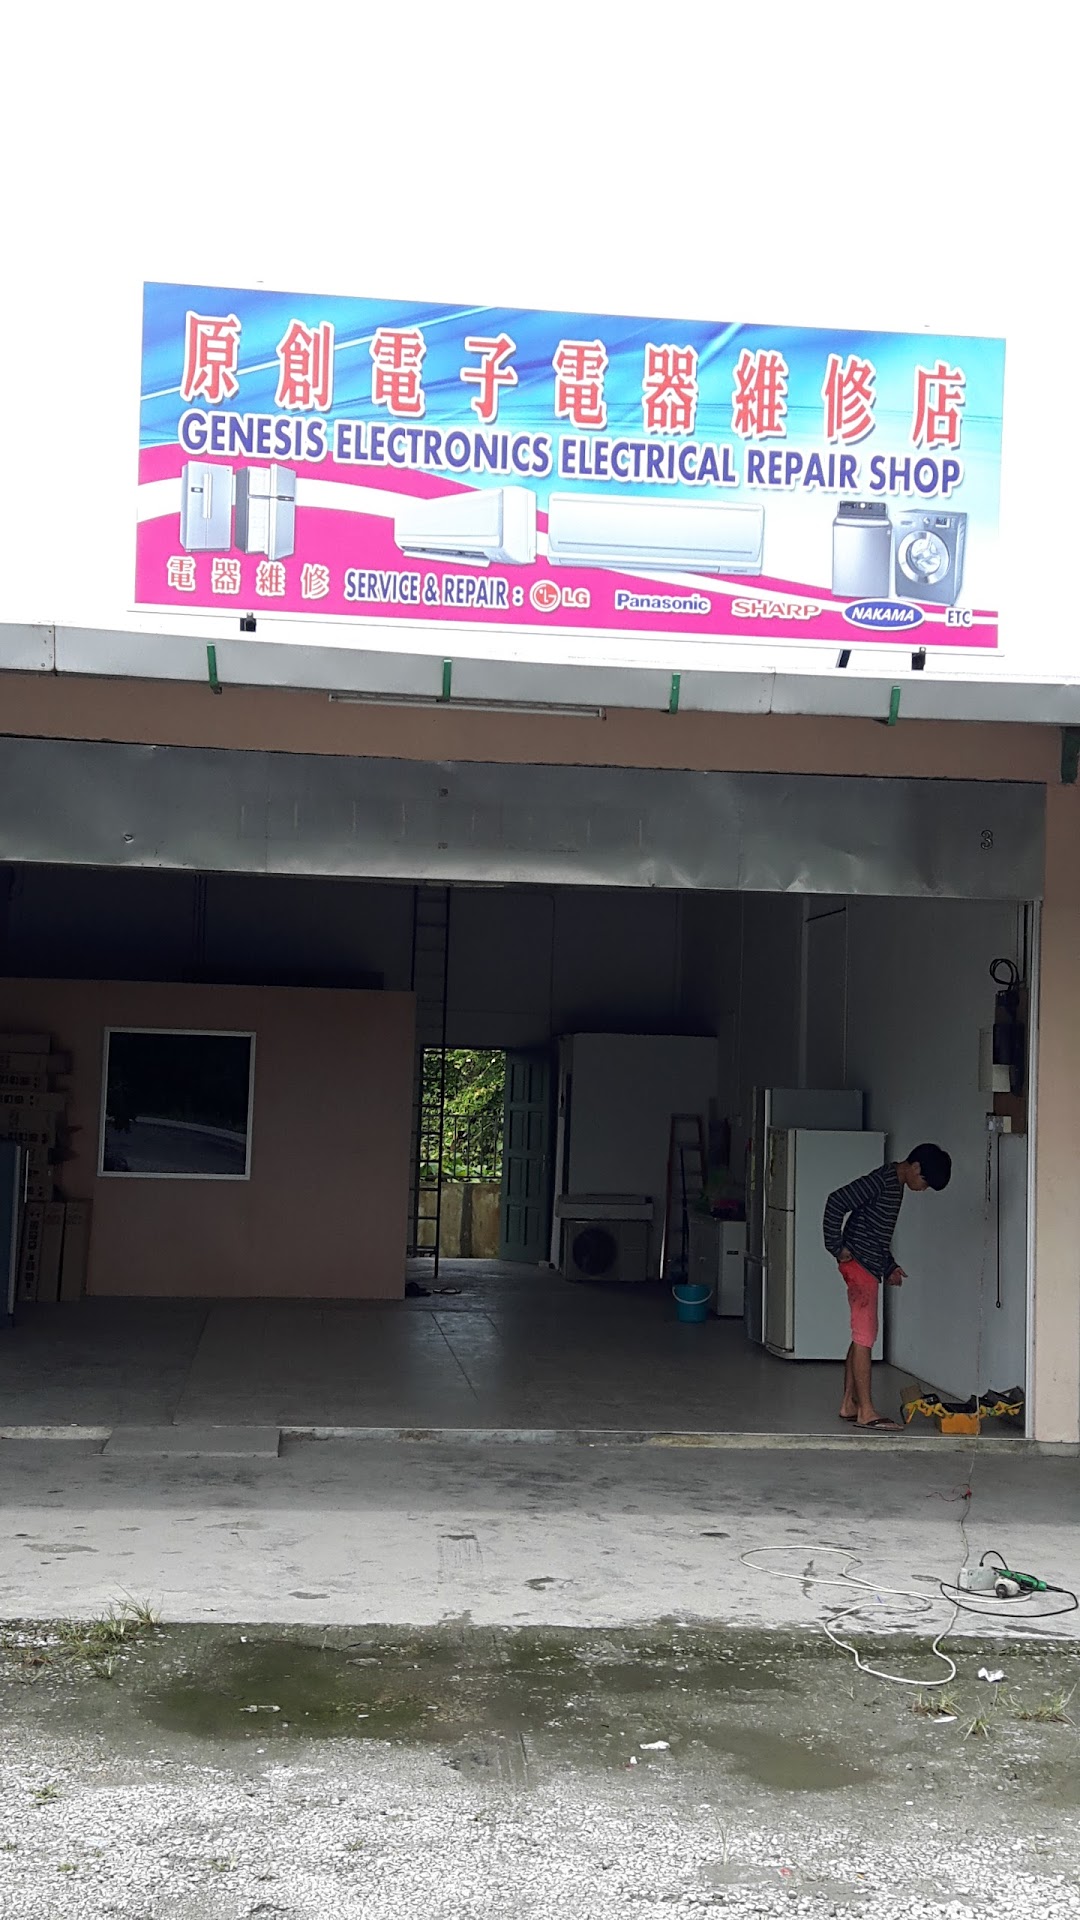 Genesis Electronics Electrical Repair Shop